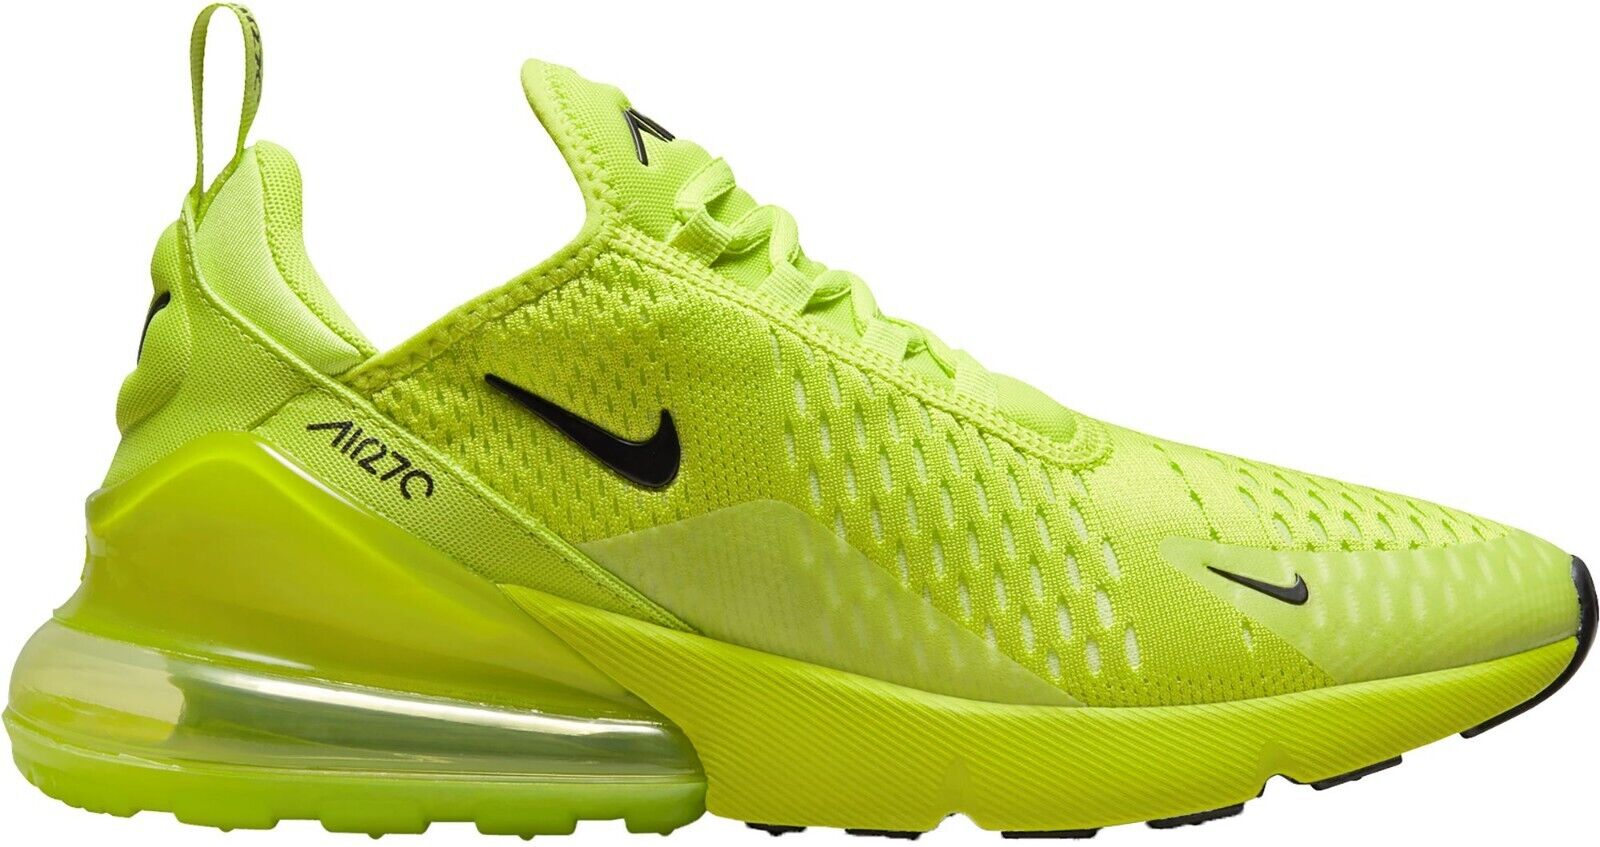 Nike Air Max 270 DV2226-300 Women's Atomic Green & Black Tennis Ball Shoes DDJJ9 (6) - image 1 of 5